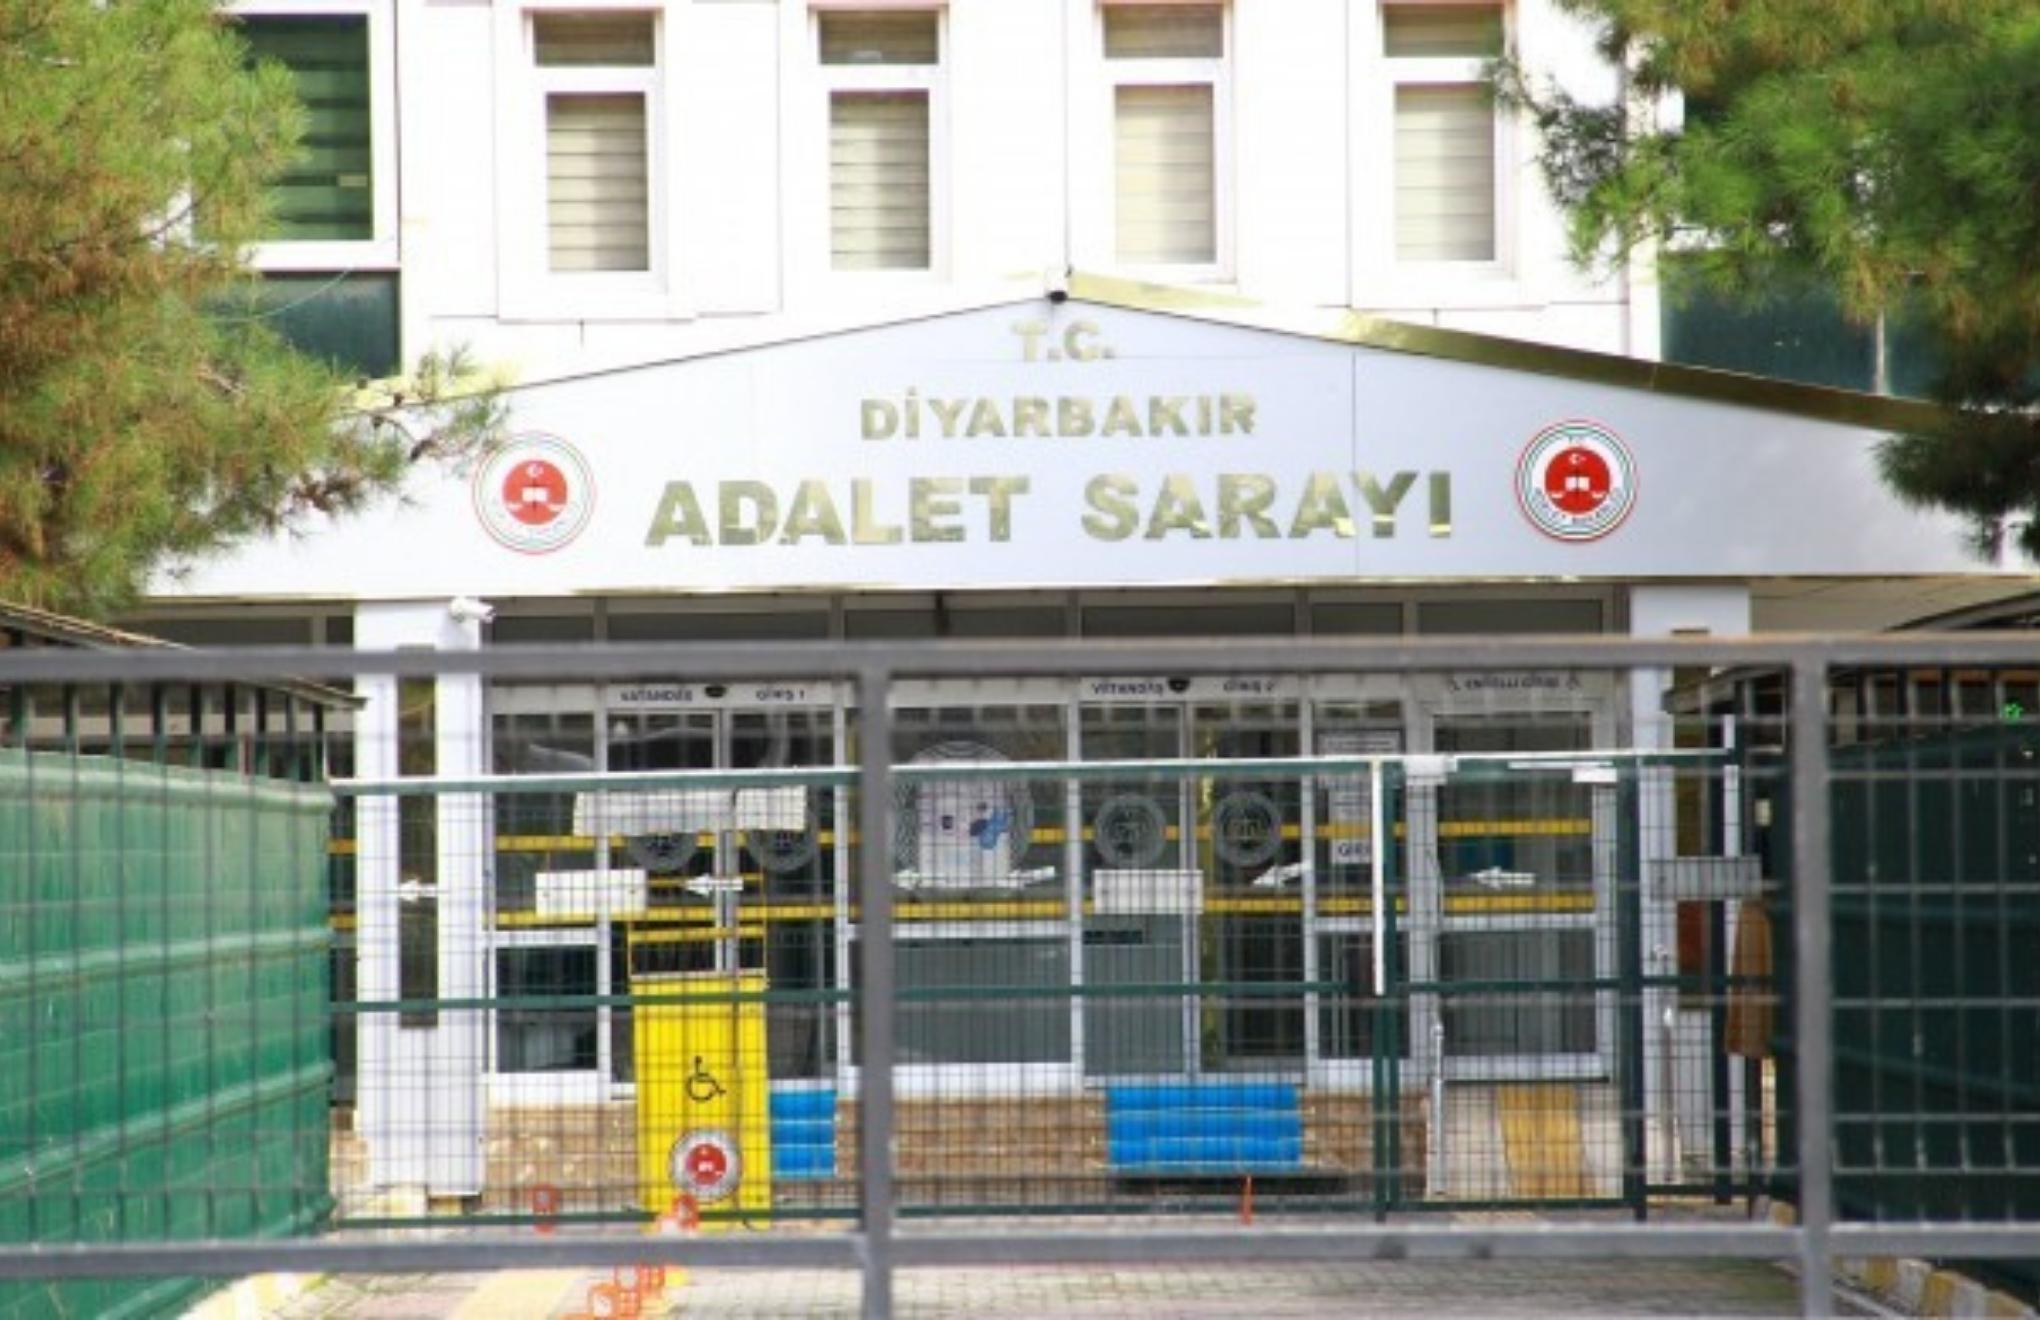 14 people arrested in Diyarbakır province